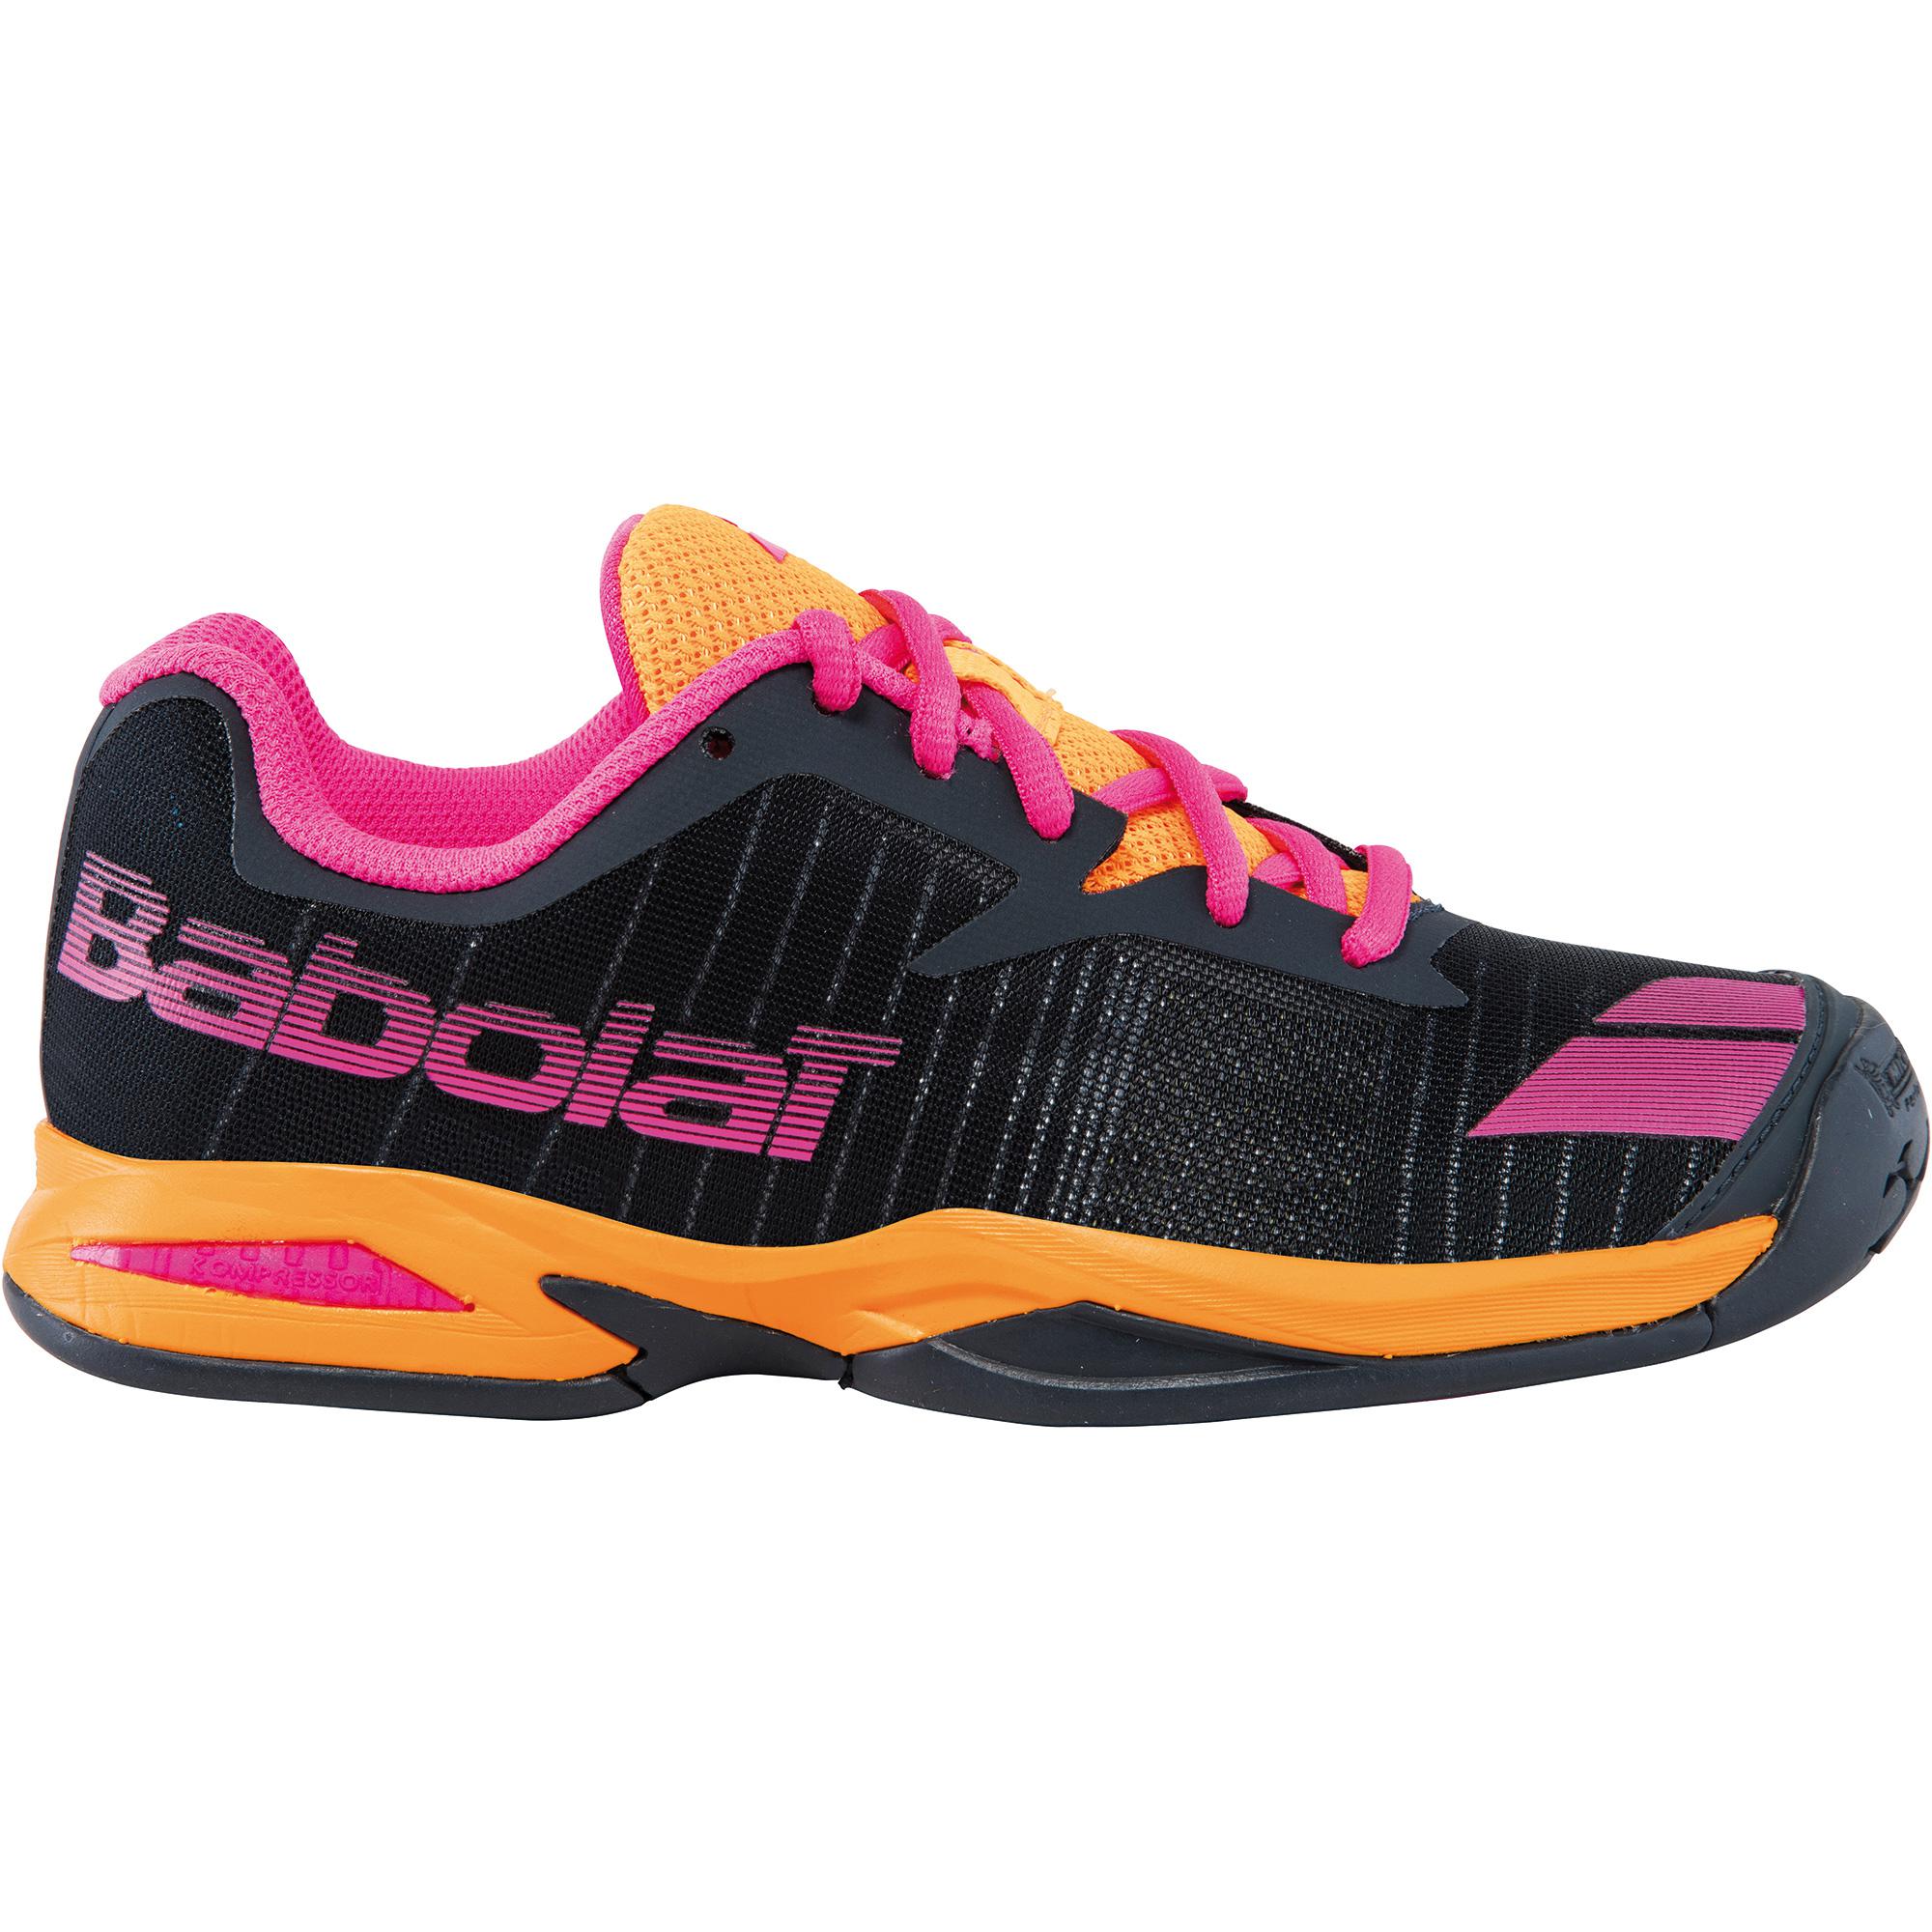 Babolat Kids Jet Tennis Shoes - Grey/Orange/Pink - Tennisnuts.com